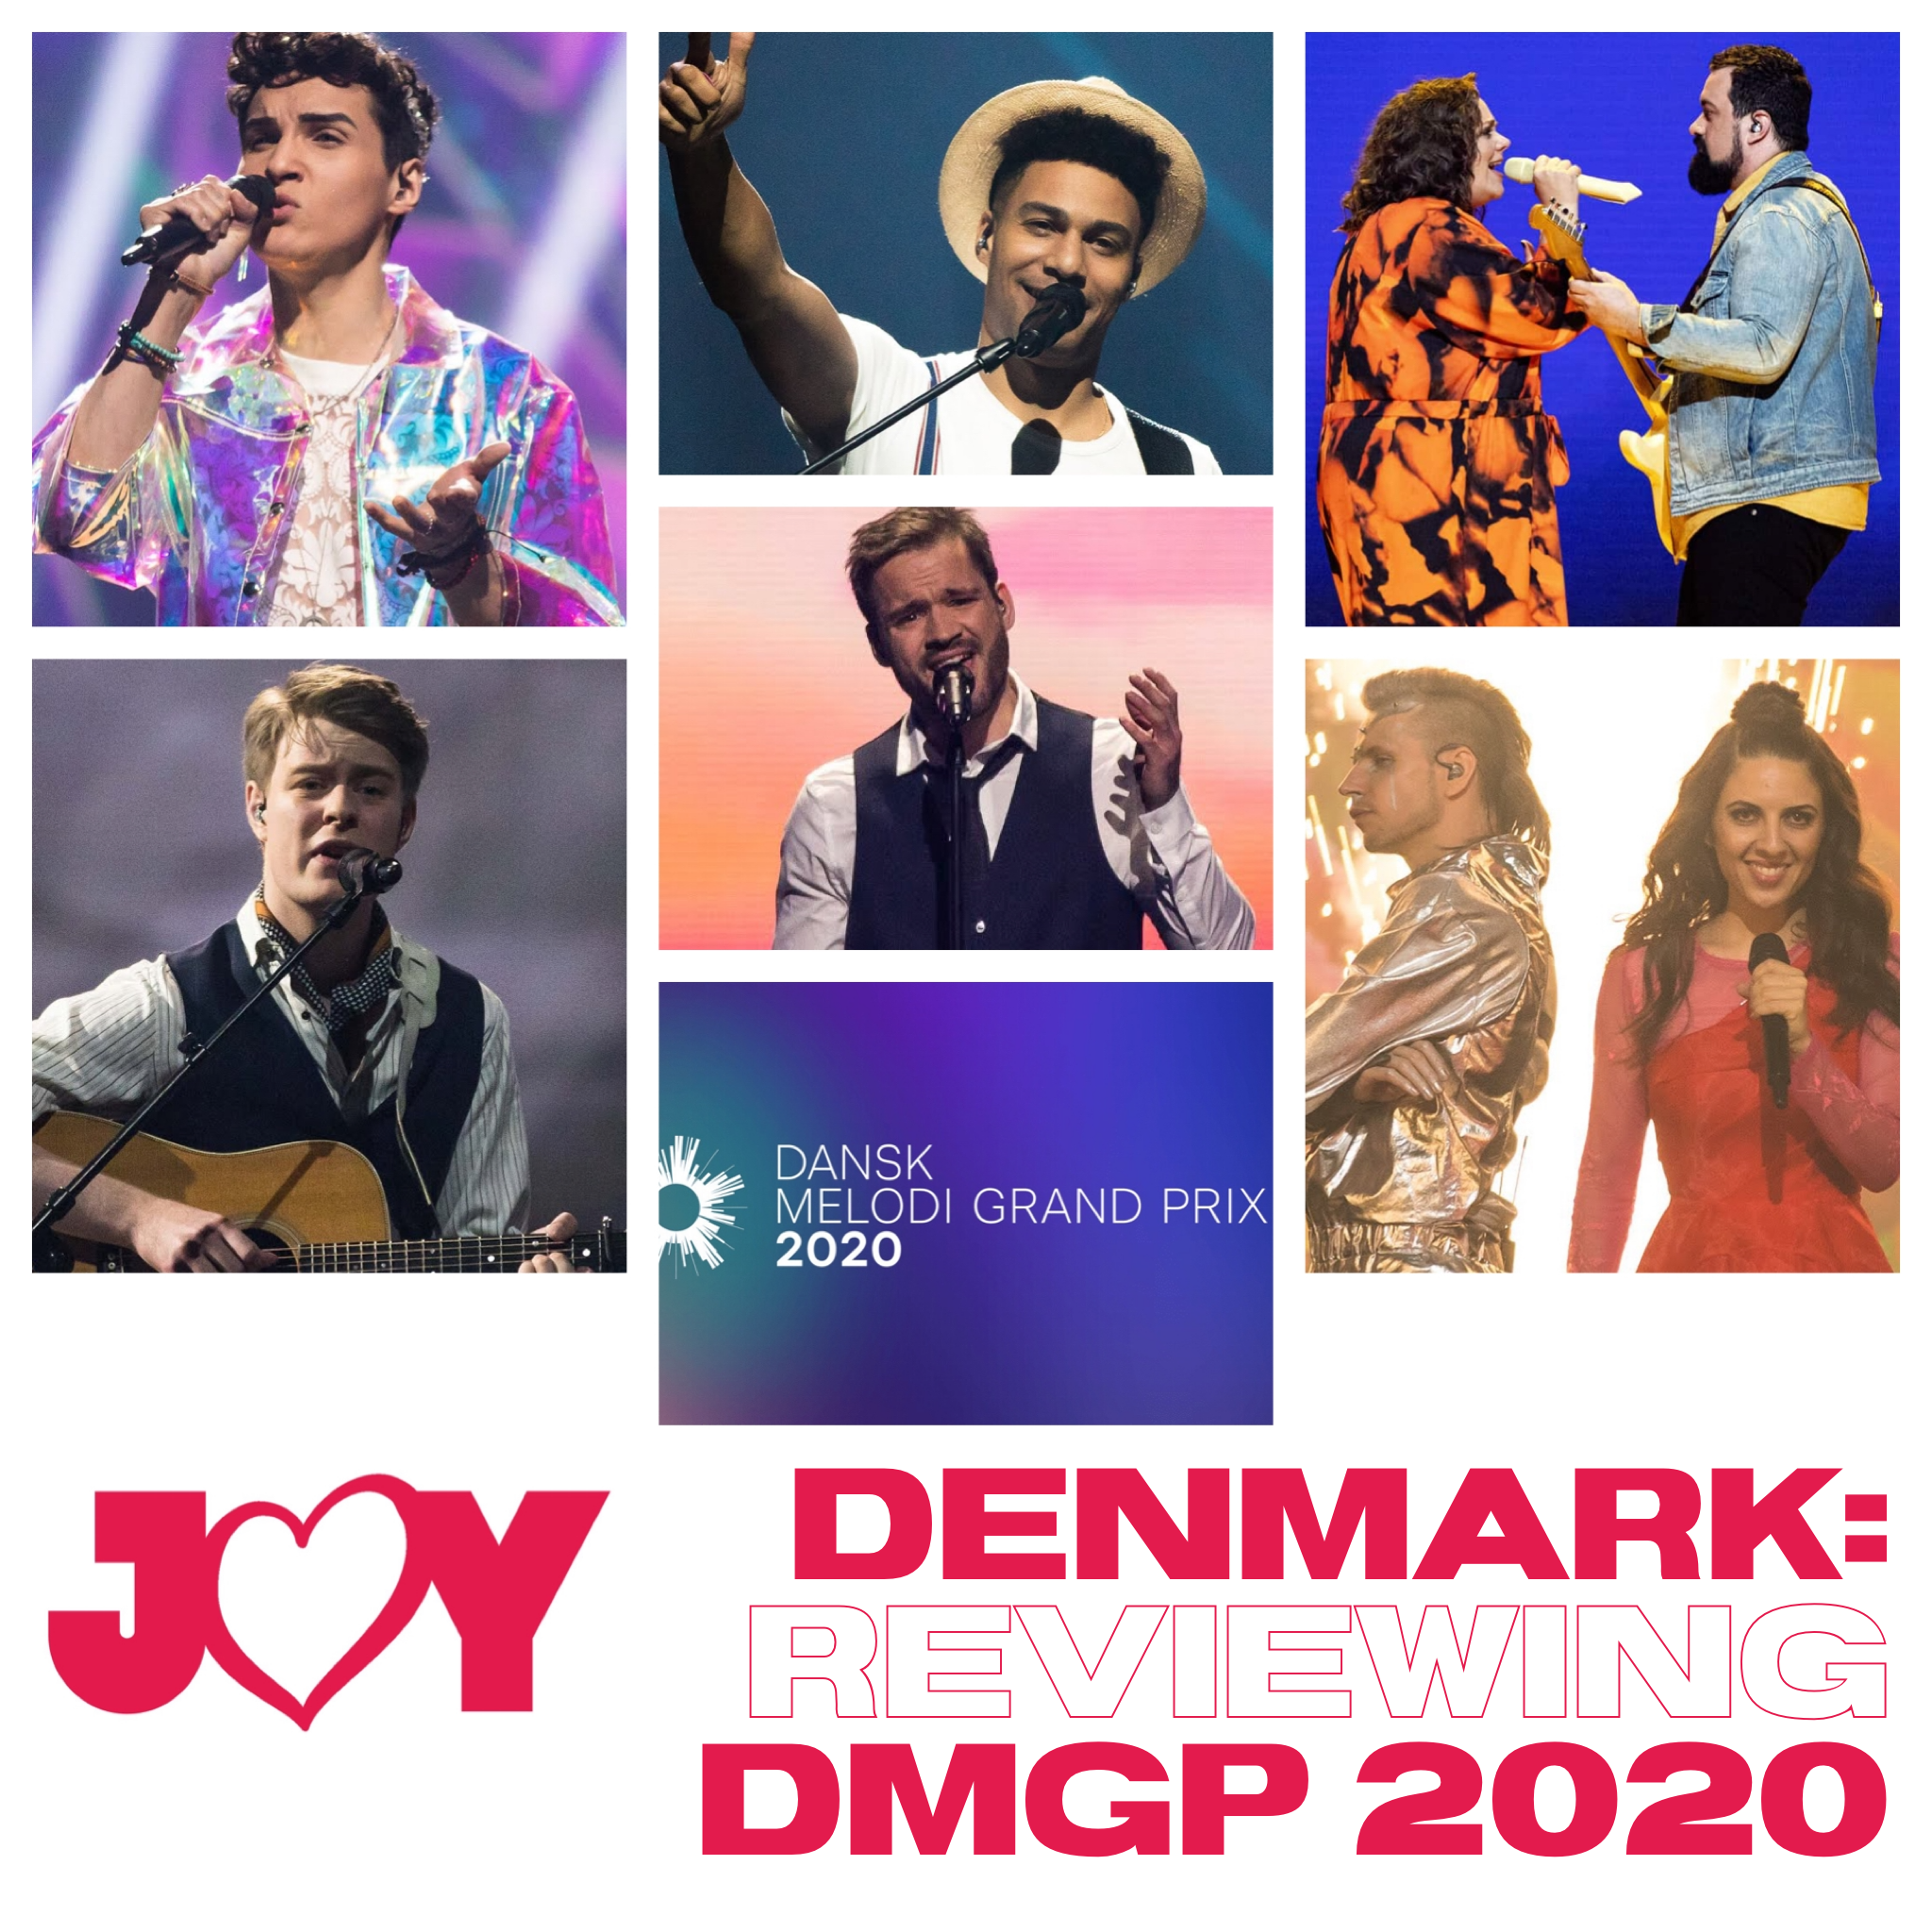 Painting it Danish beige: Reviewing Dansk Melodi Grand Prix 2020